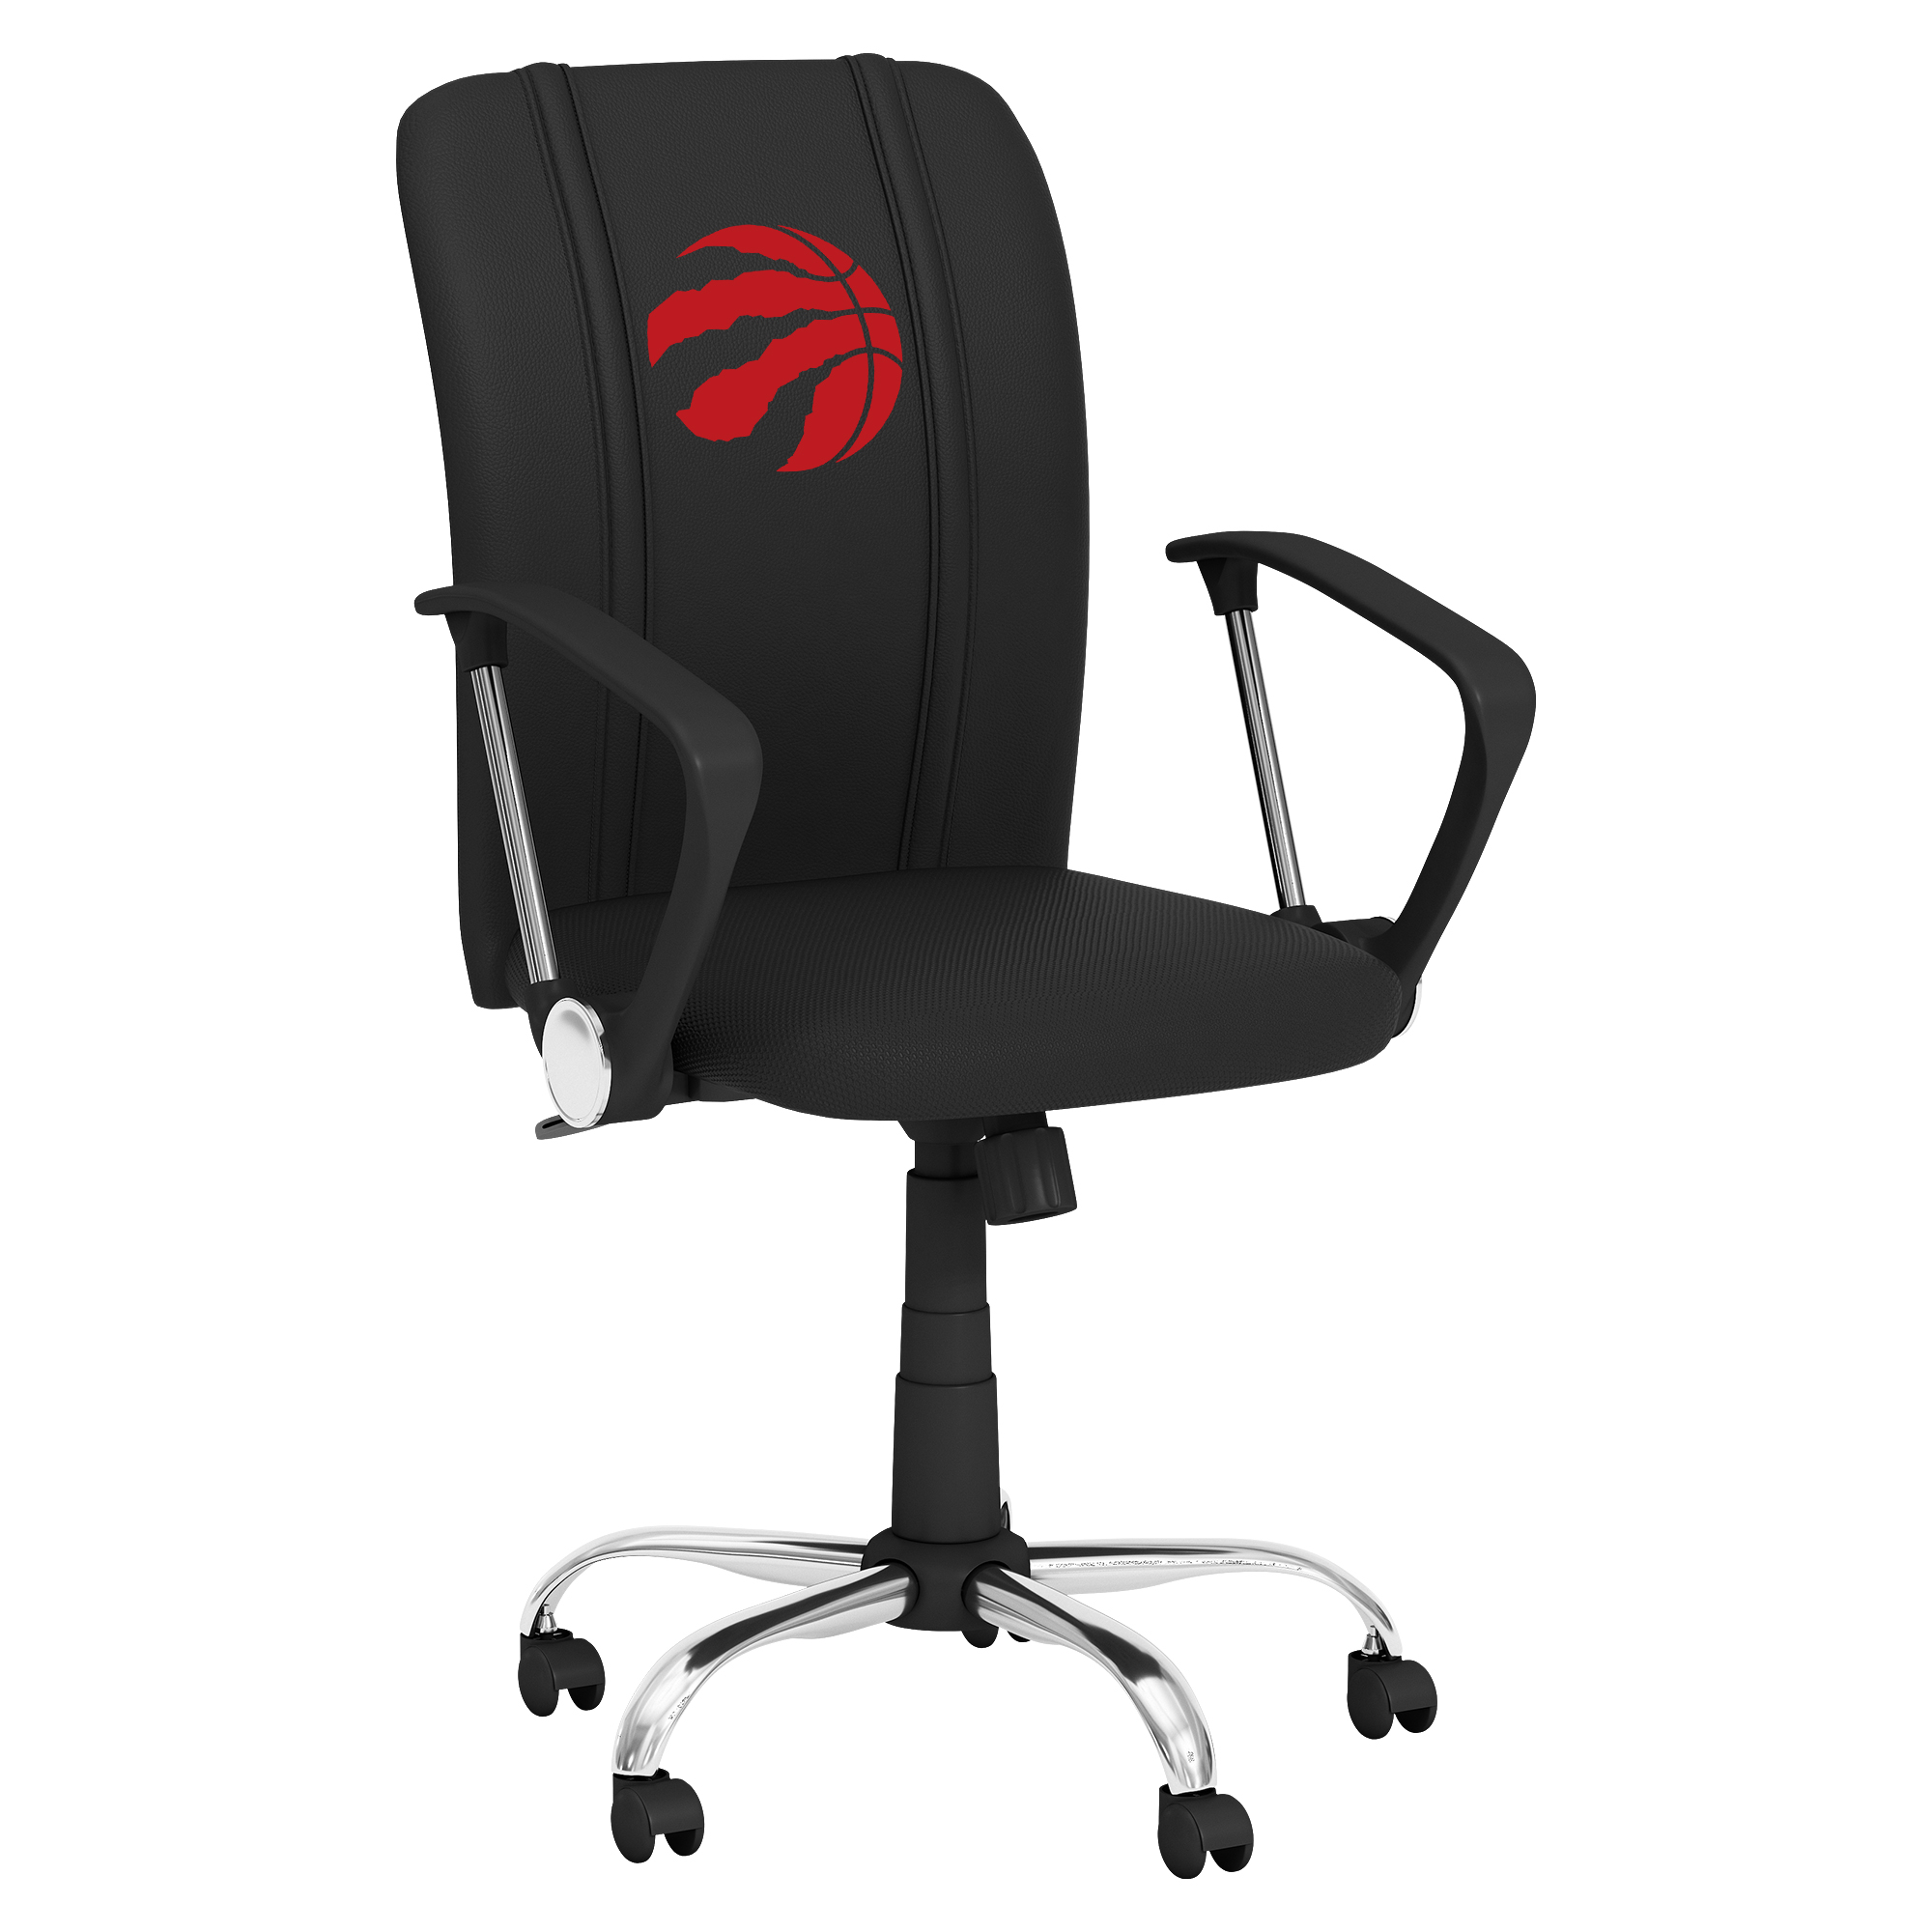 Toronto Raptors Curve Task Chair with Toronto Raptors Primary Red Logo